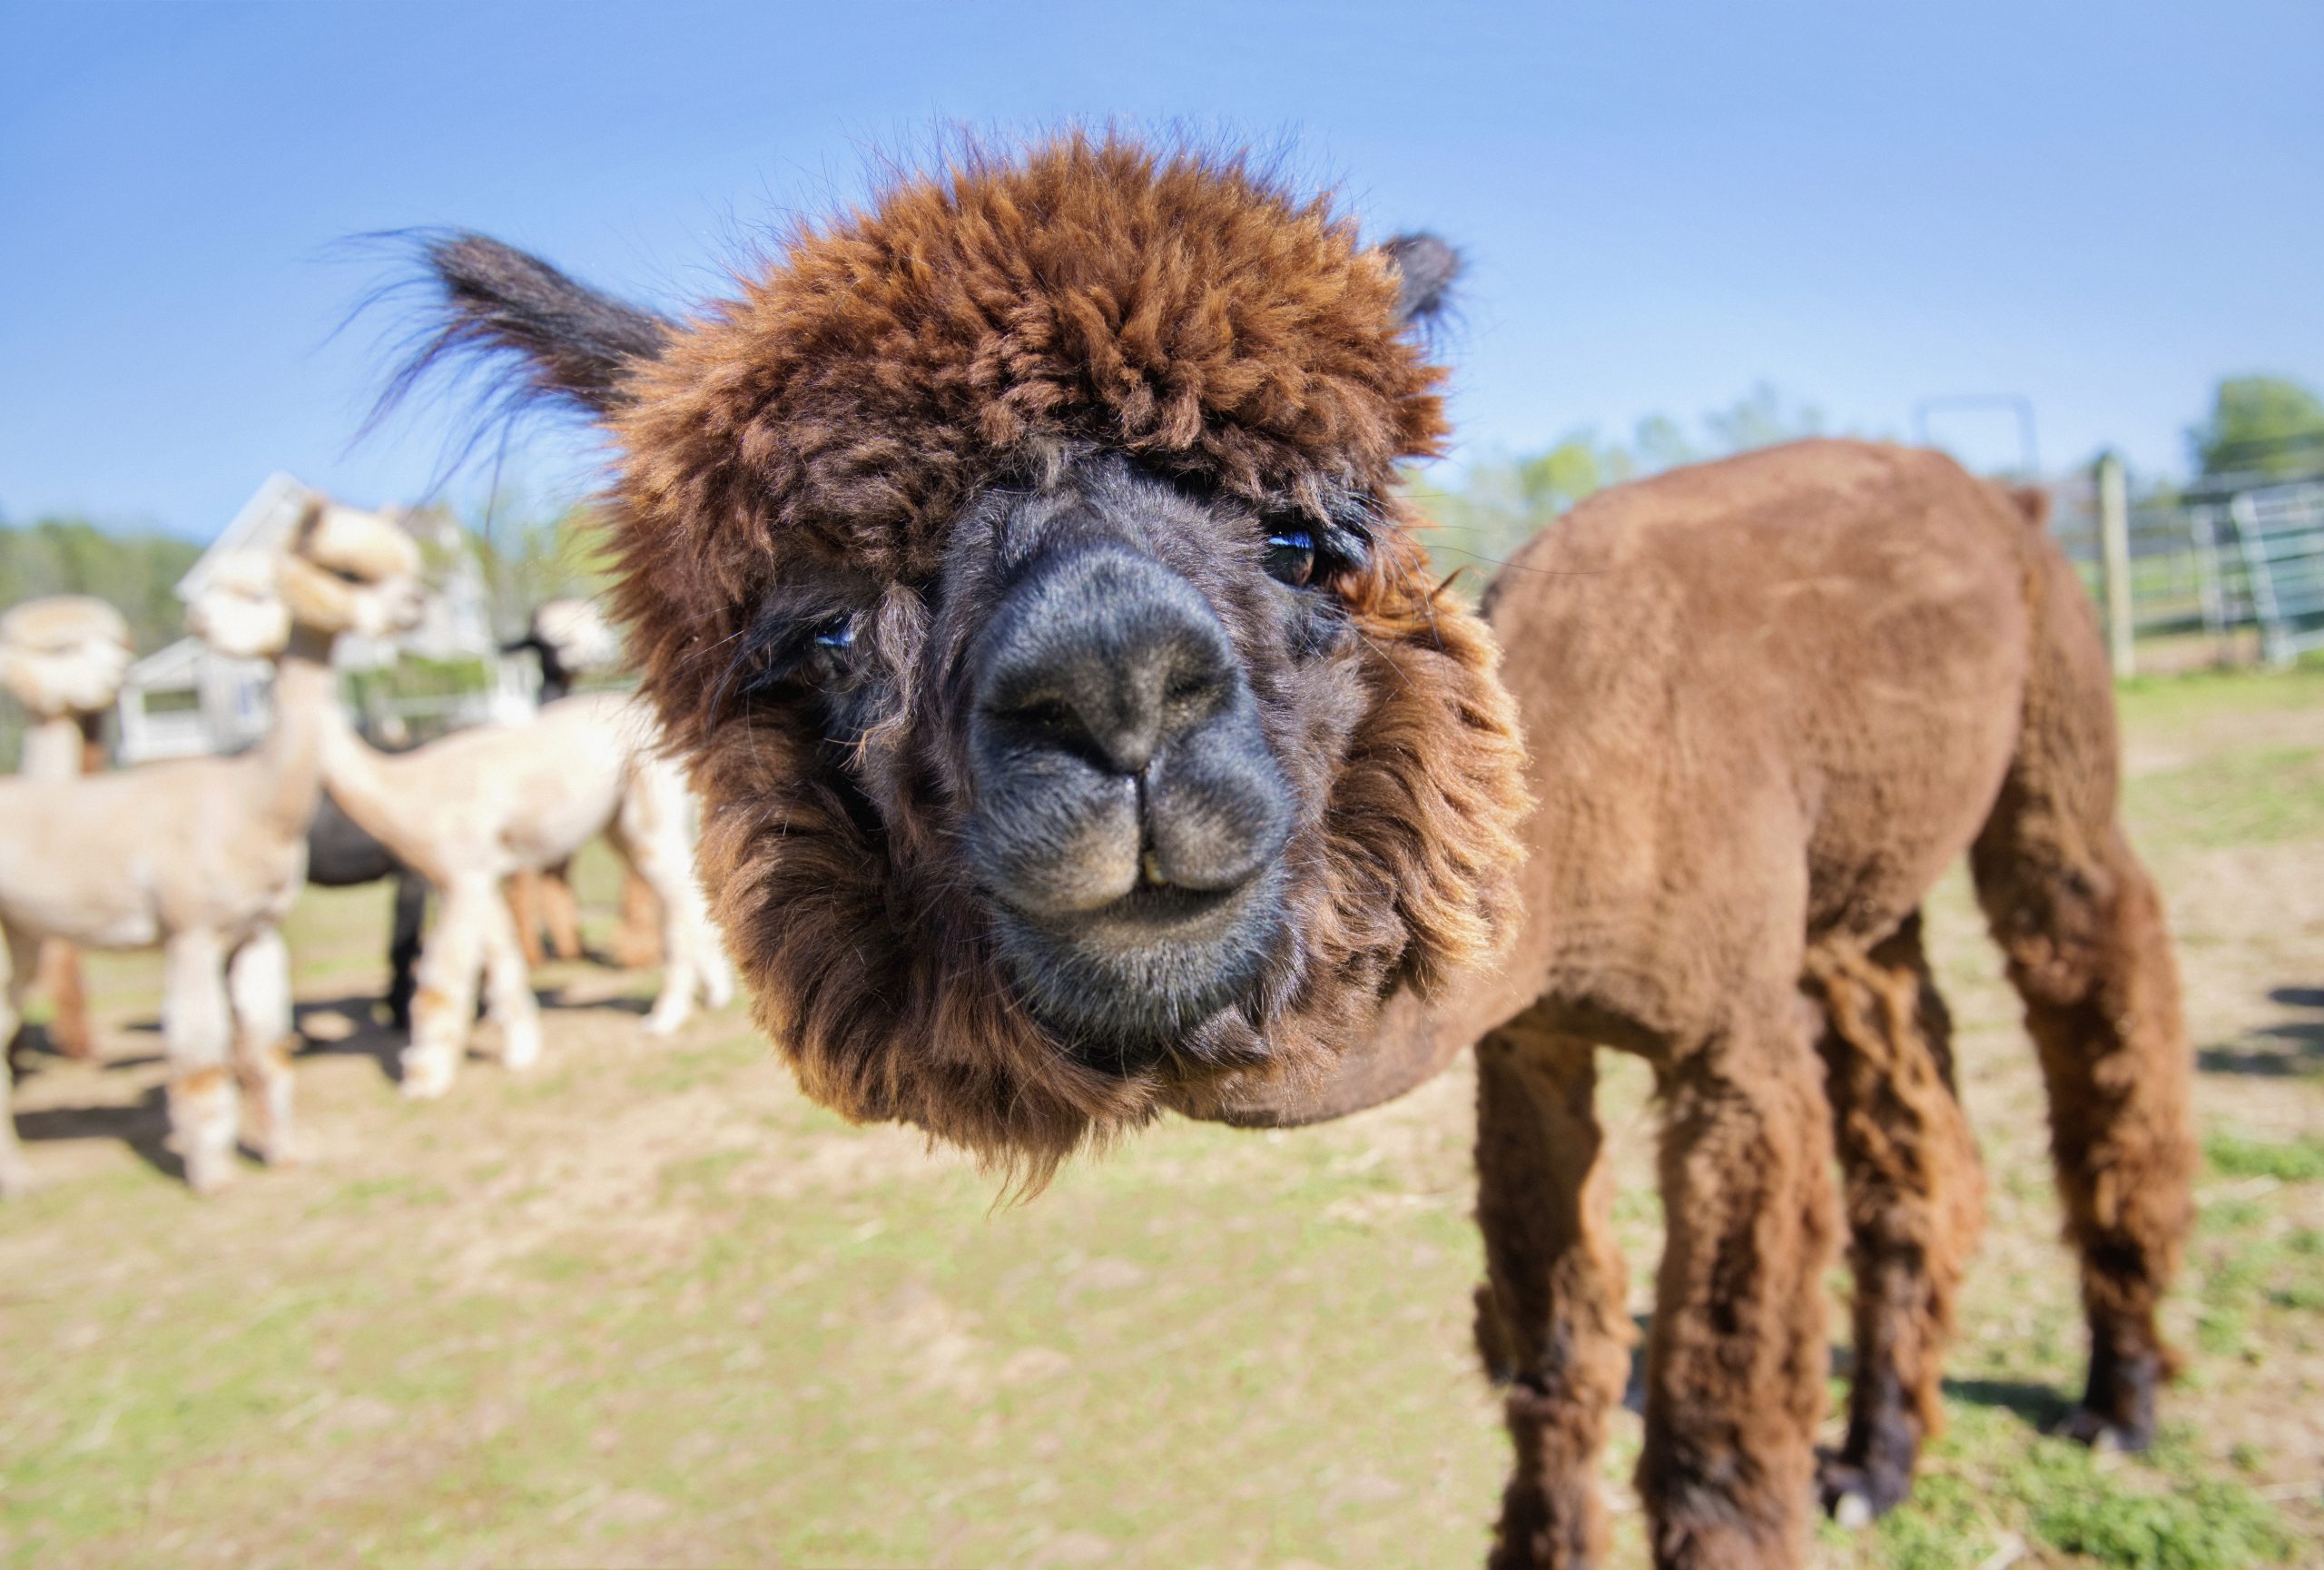 40 Adorable Alpaca Photos to Make You Smile | Reader's Digest